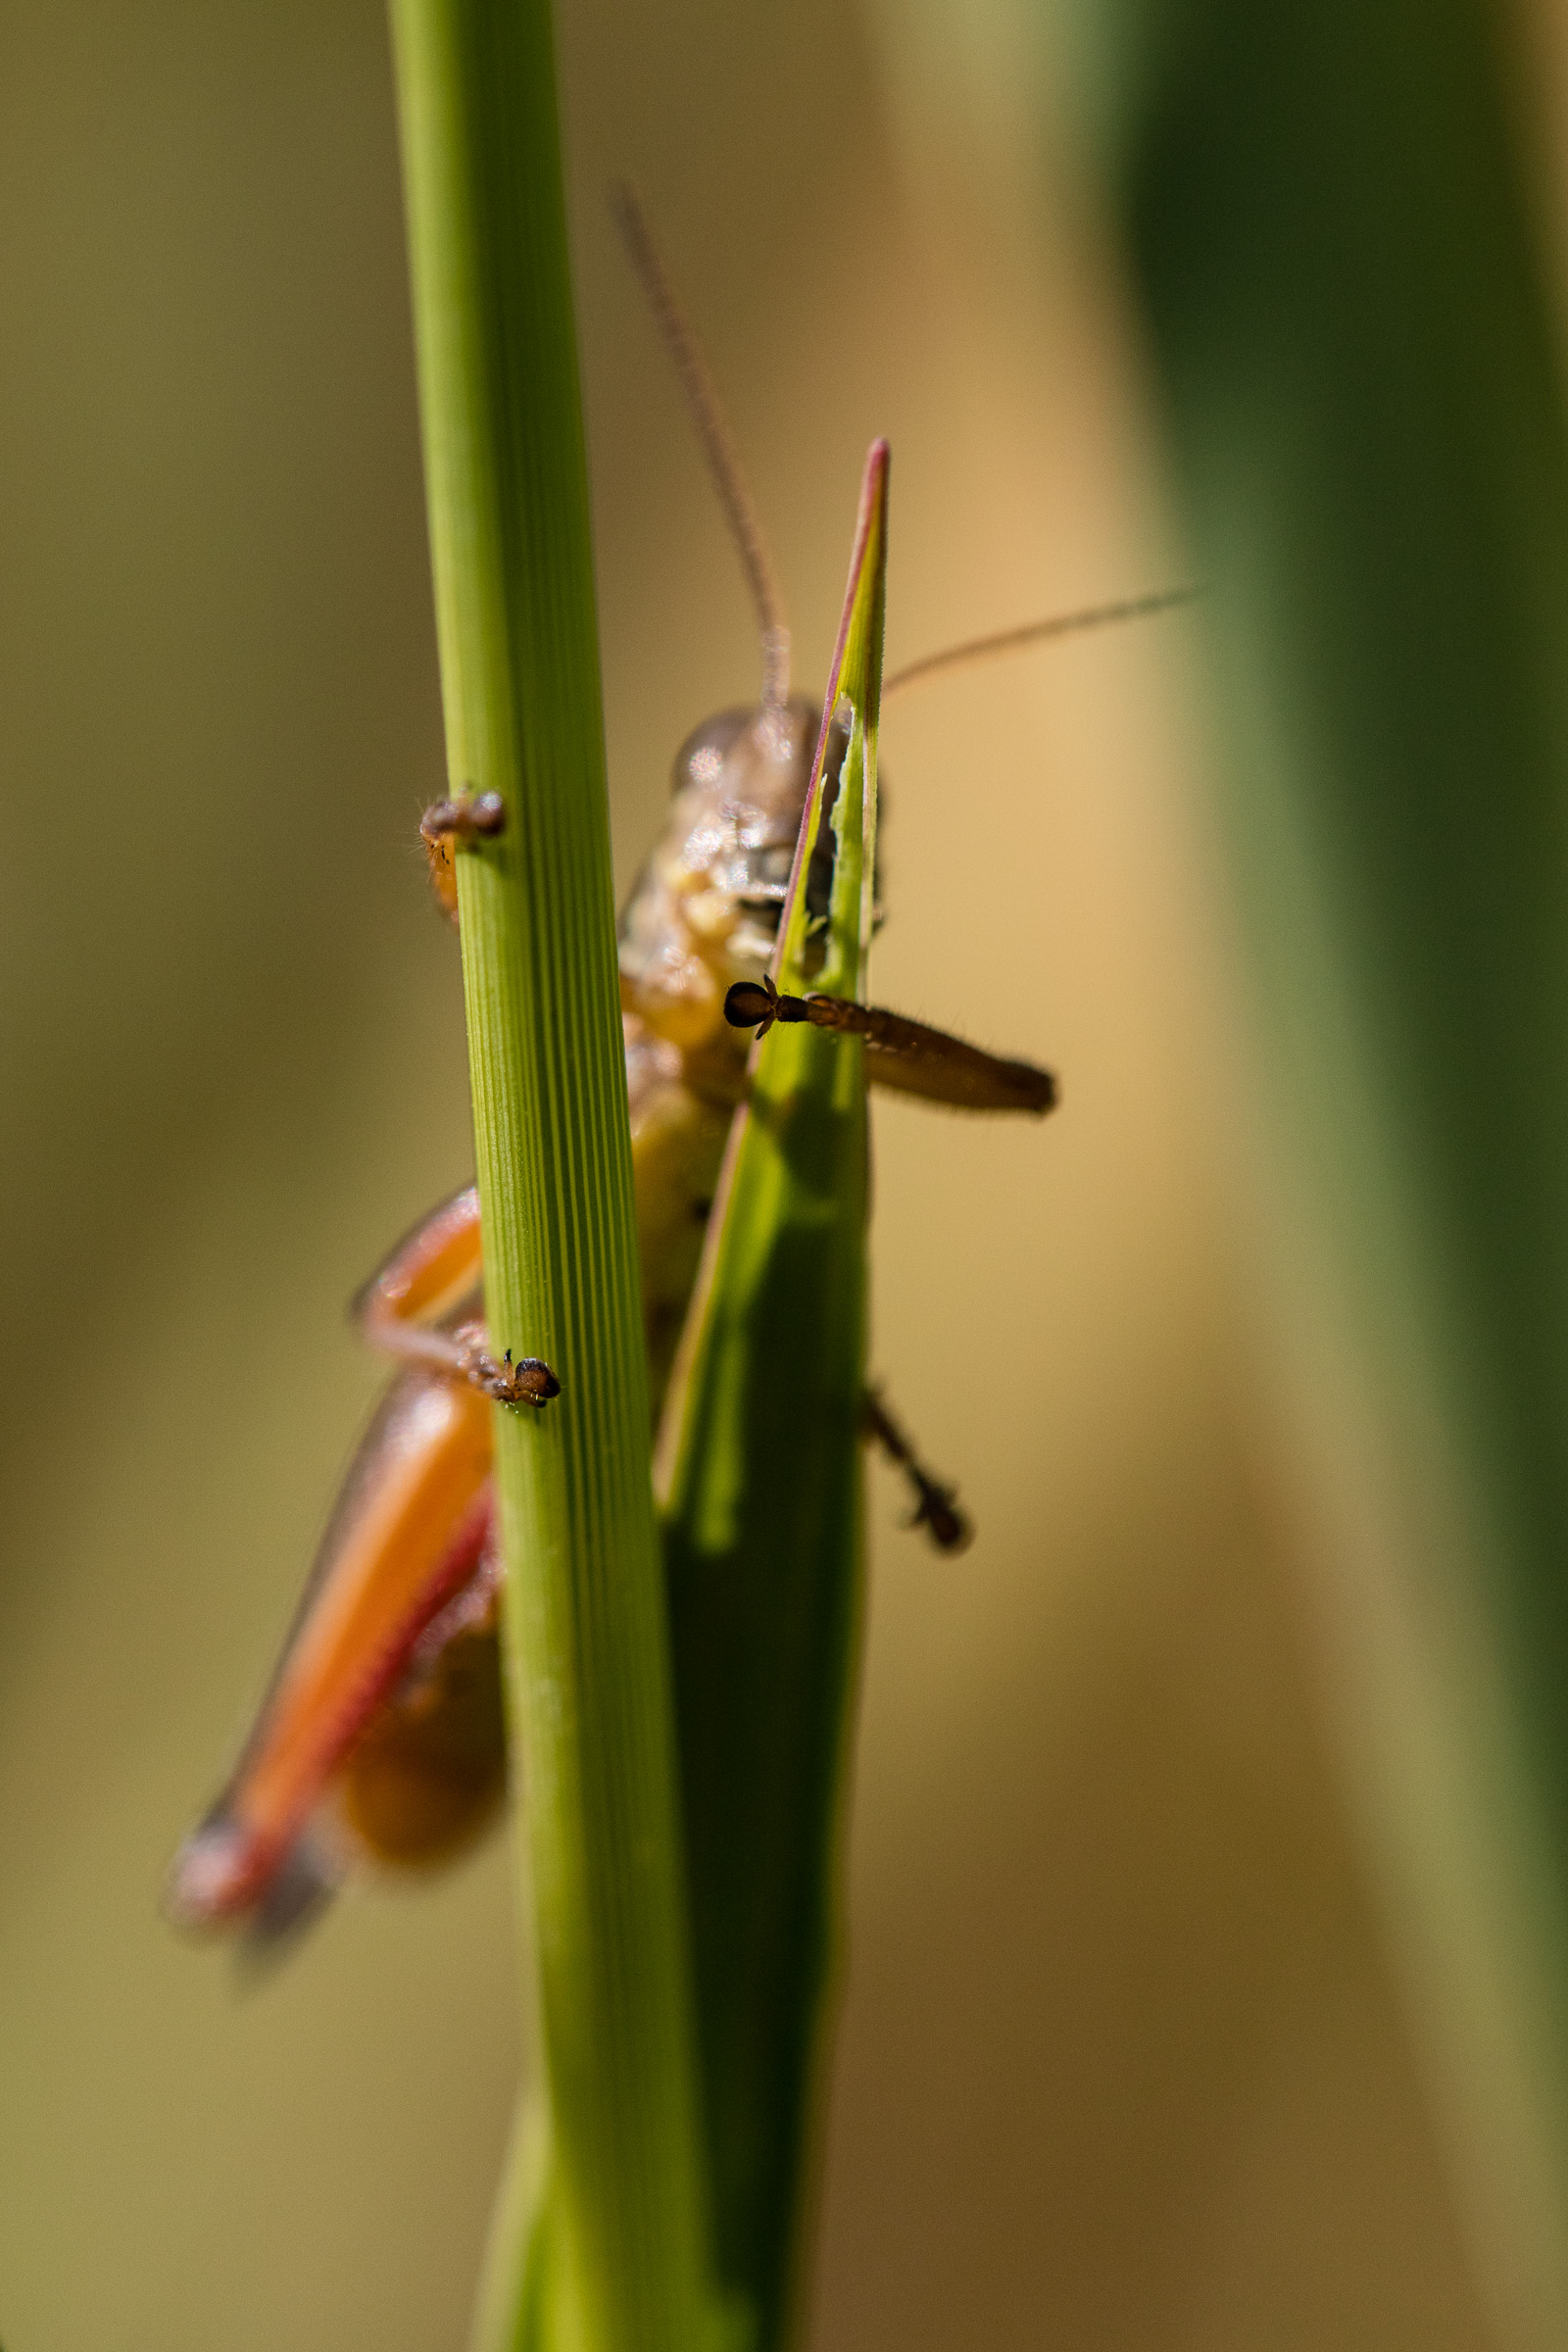 Grasshopper on Grass